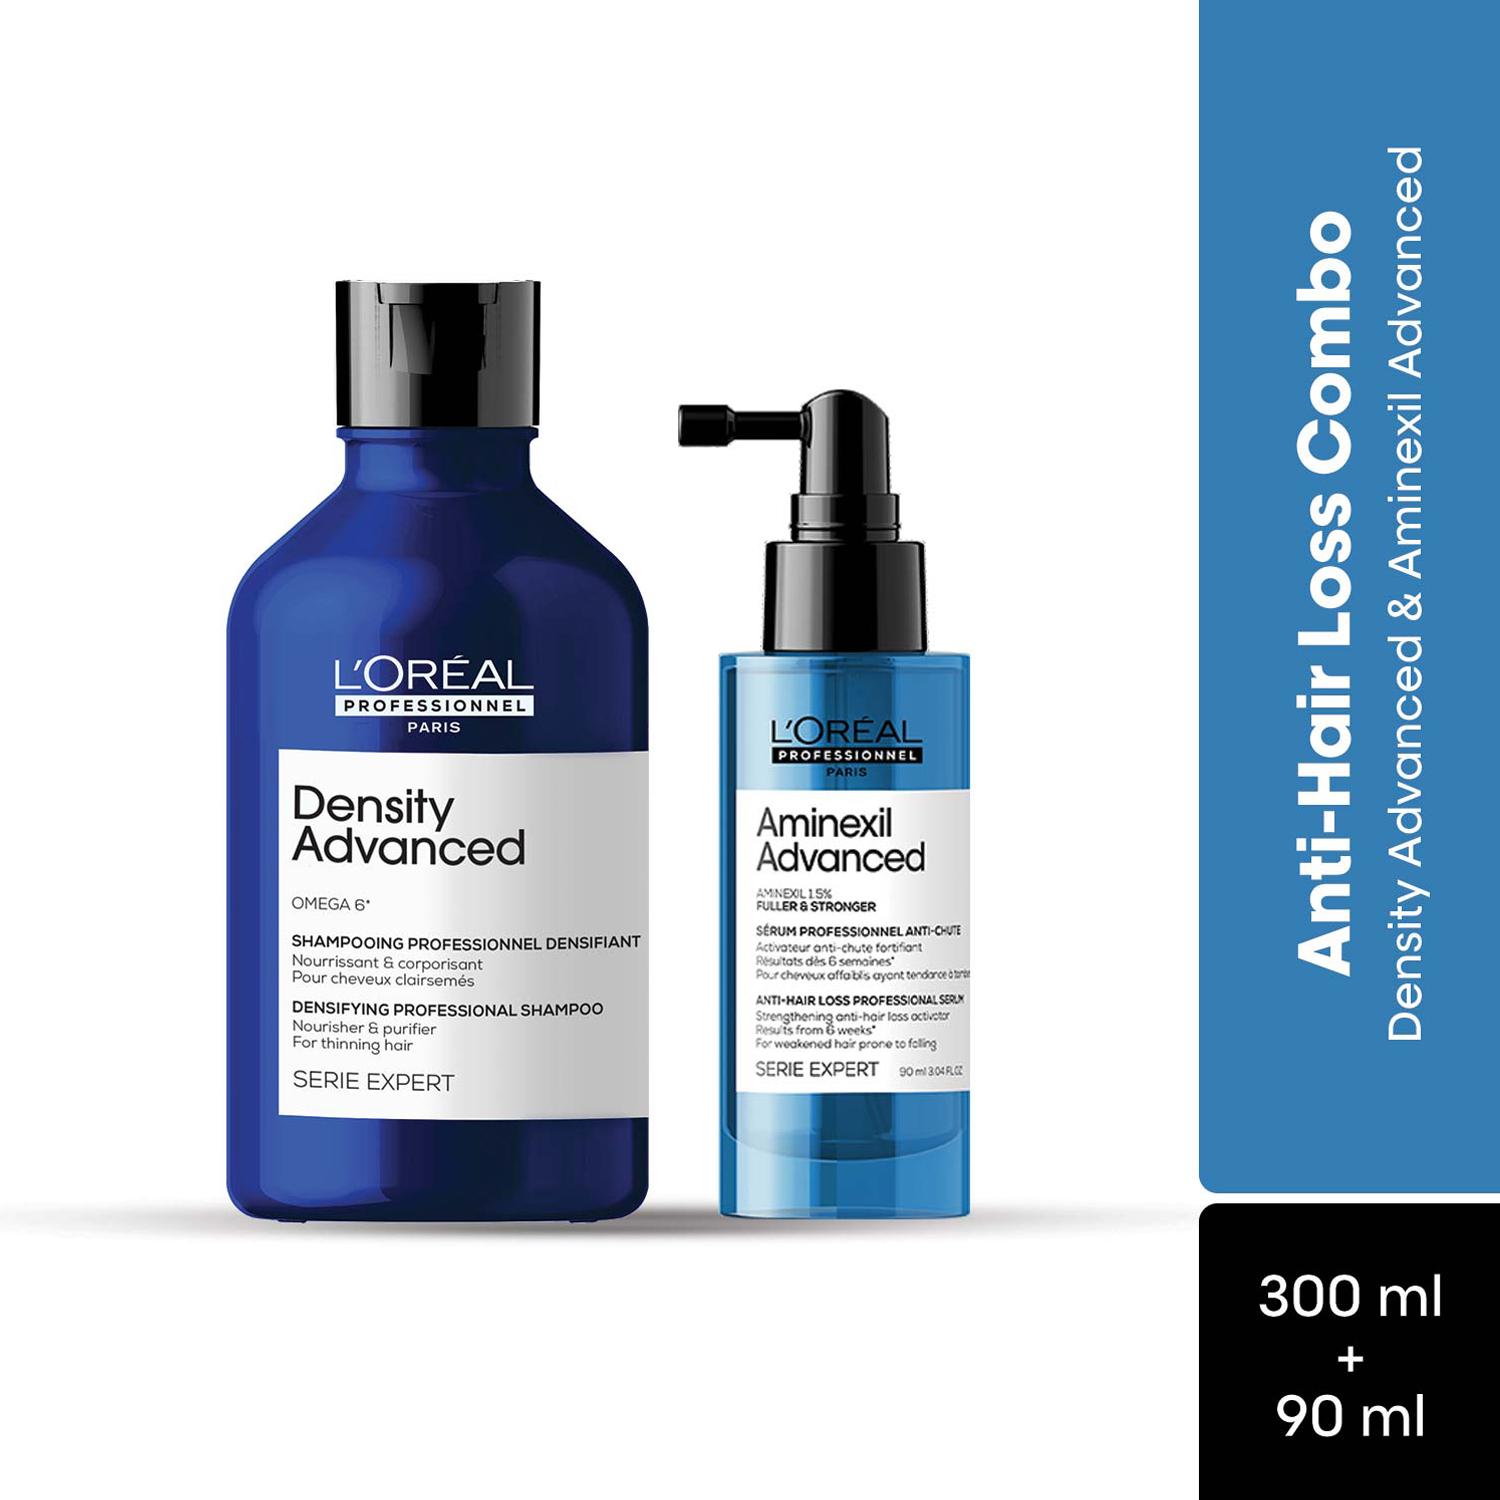 L'Oreal Professionnel Anti-Hair Loss Regime-Density Advanced Shampoo(300ml)Aminexil Advanced Combo